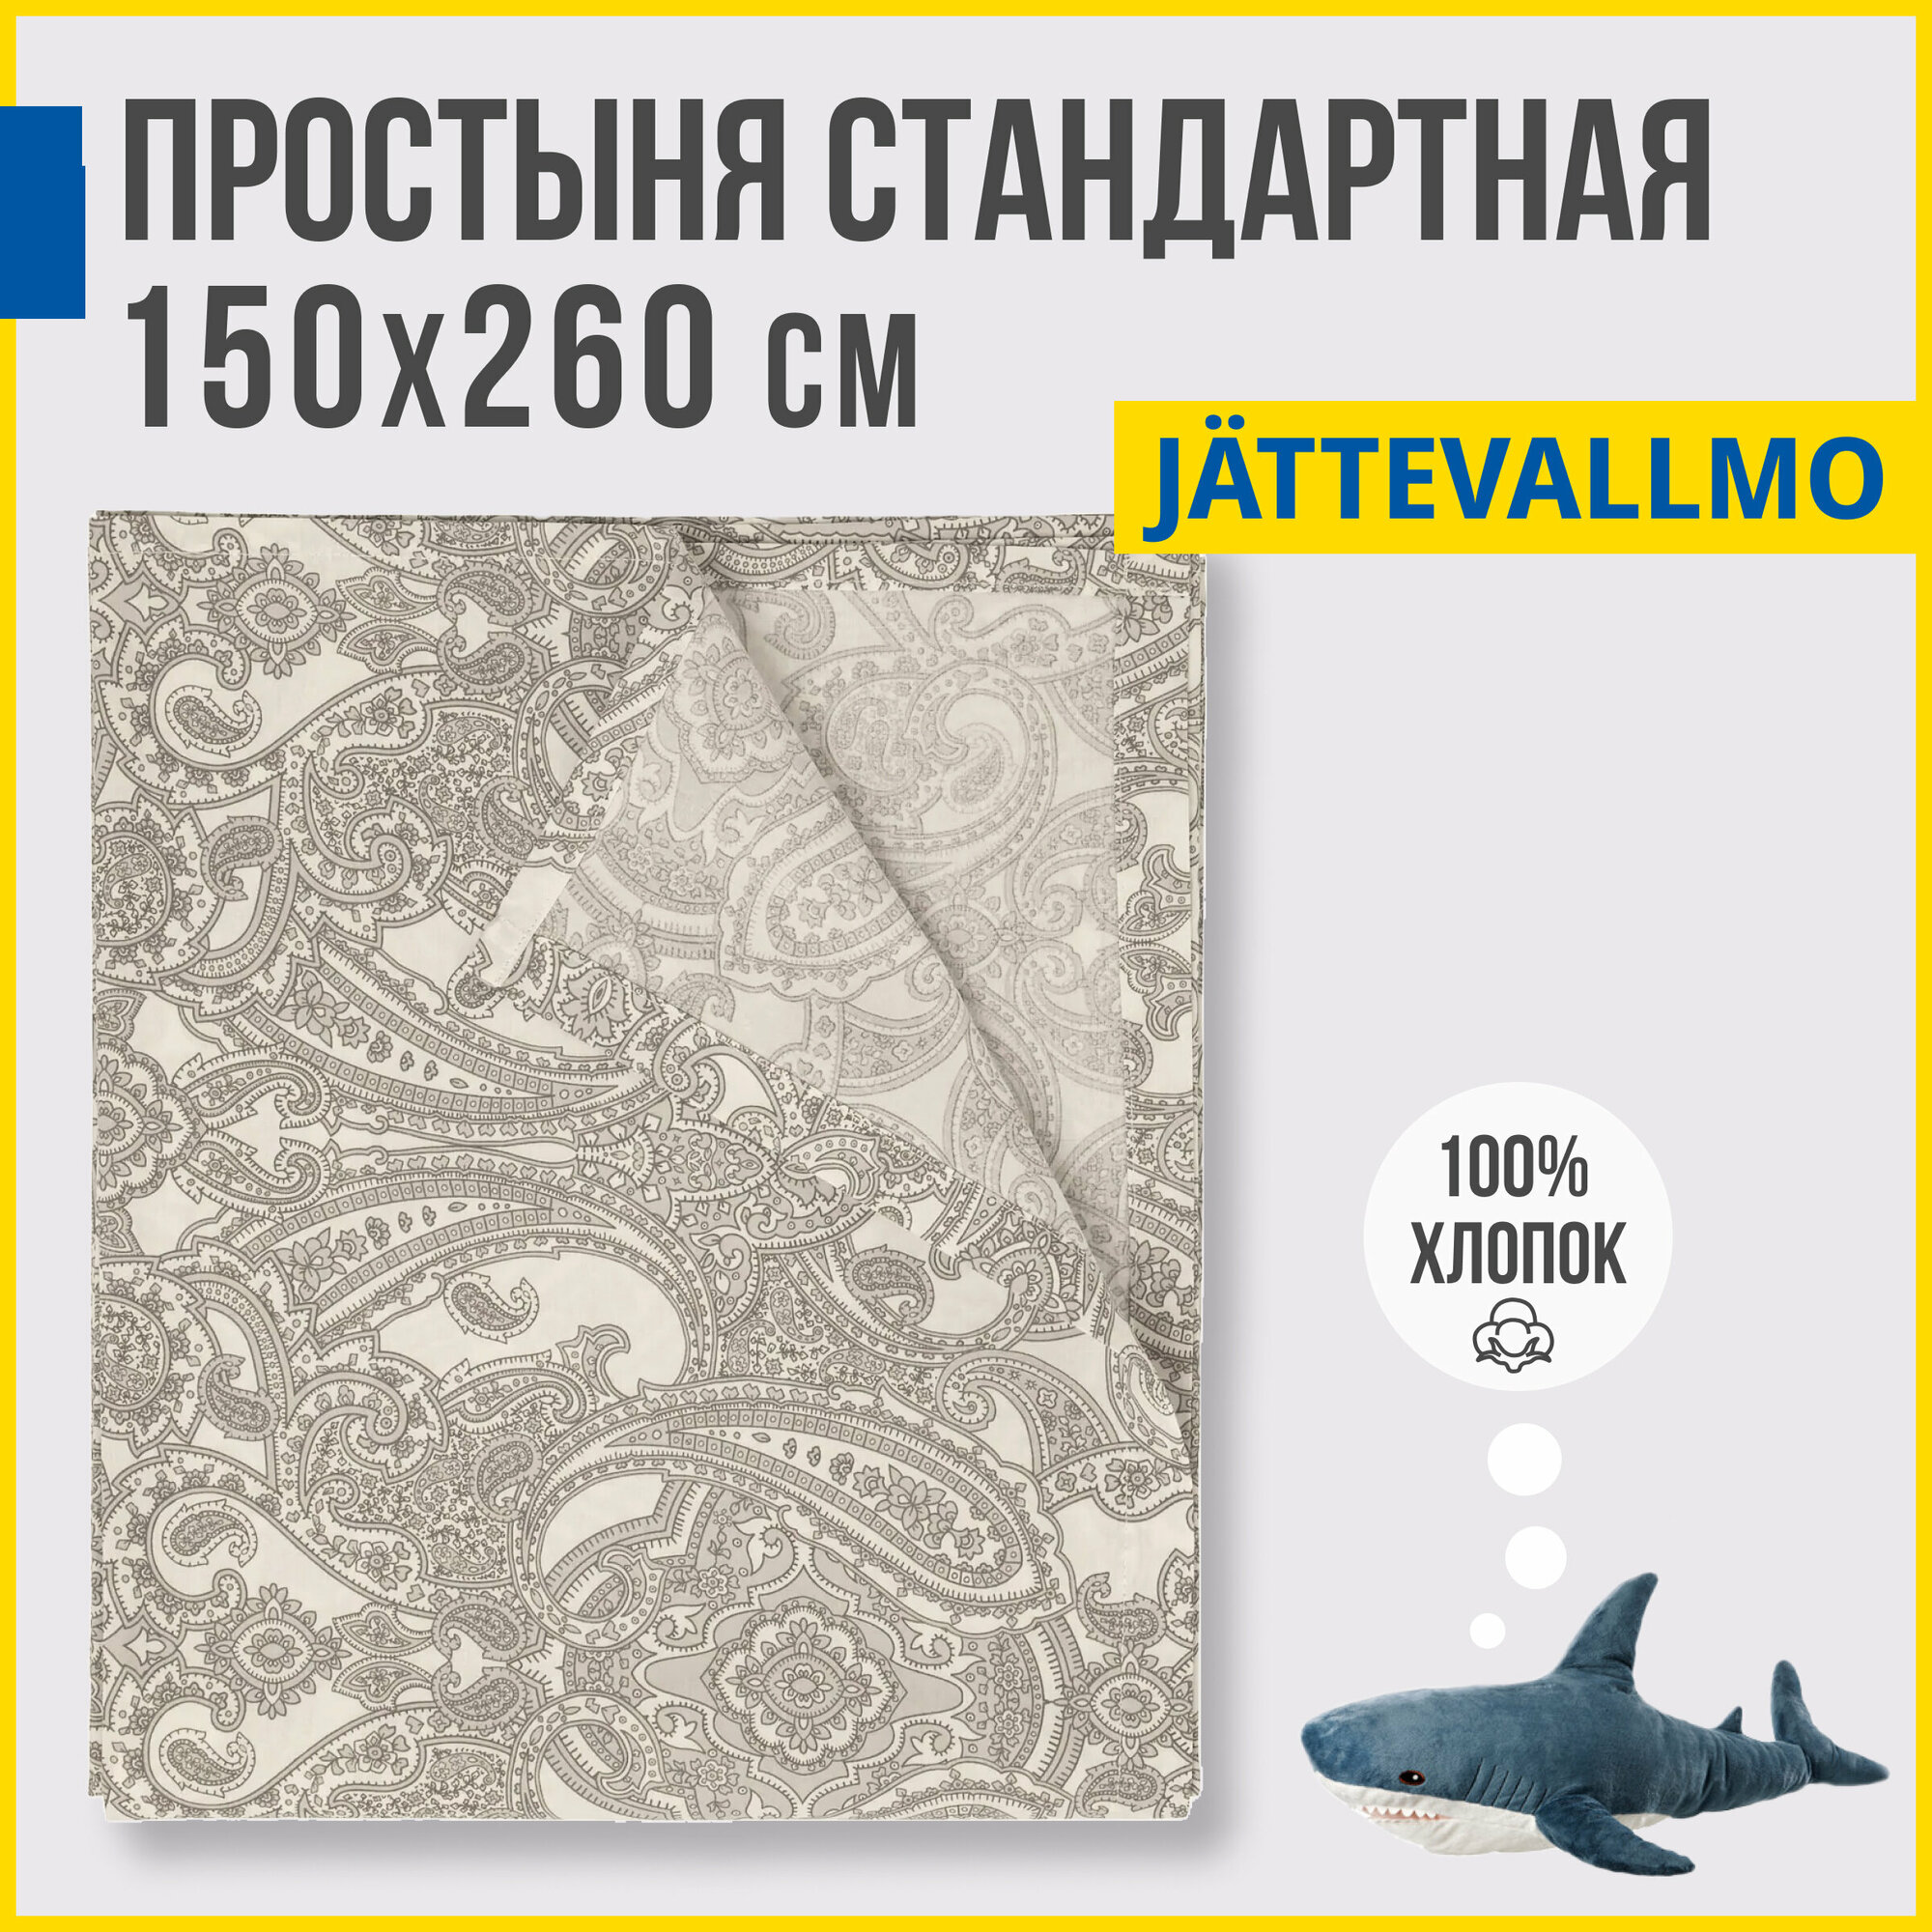 Простыня Antonio Orso йэттеваллмо 150х260 см, серый